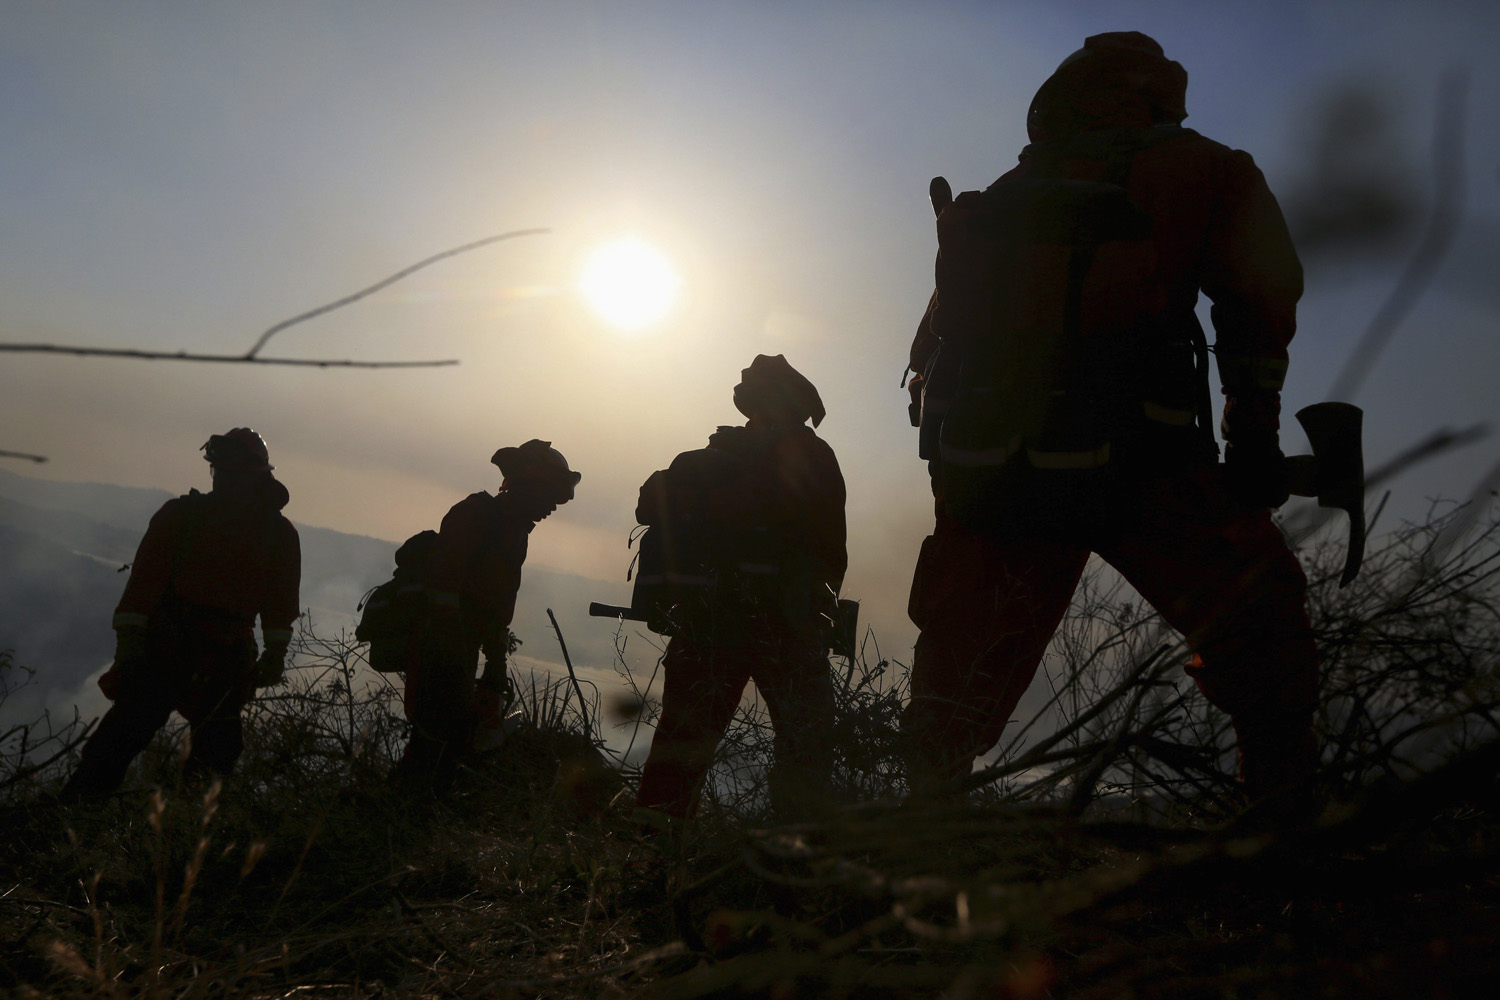 A prison crew battles a fire in an avocado grove outside Fallbrook, California